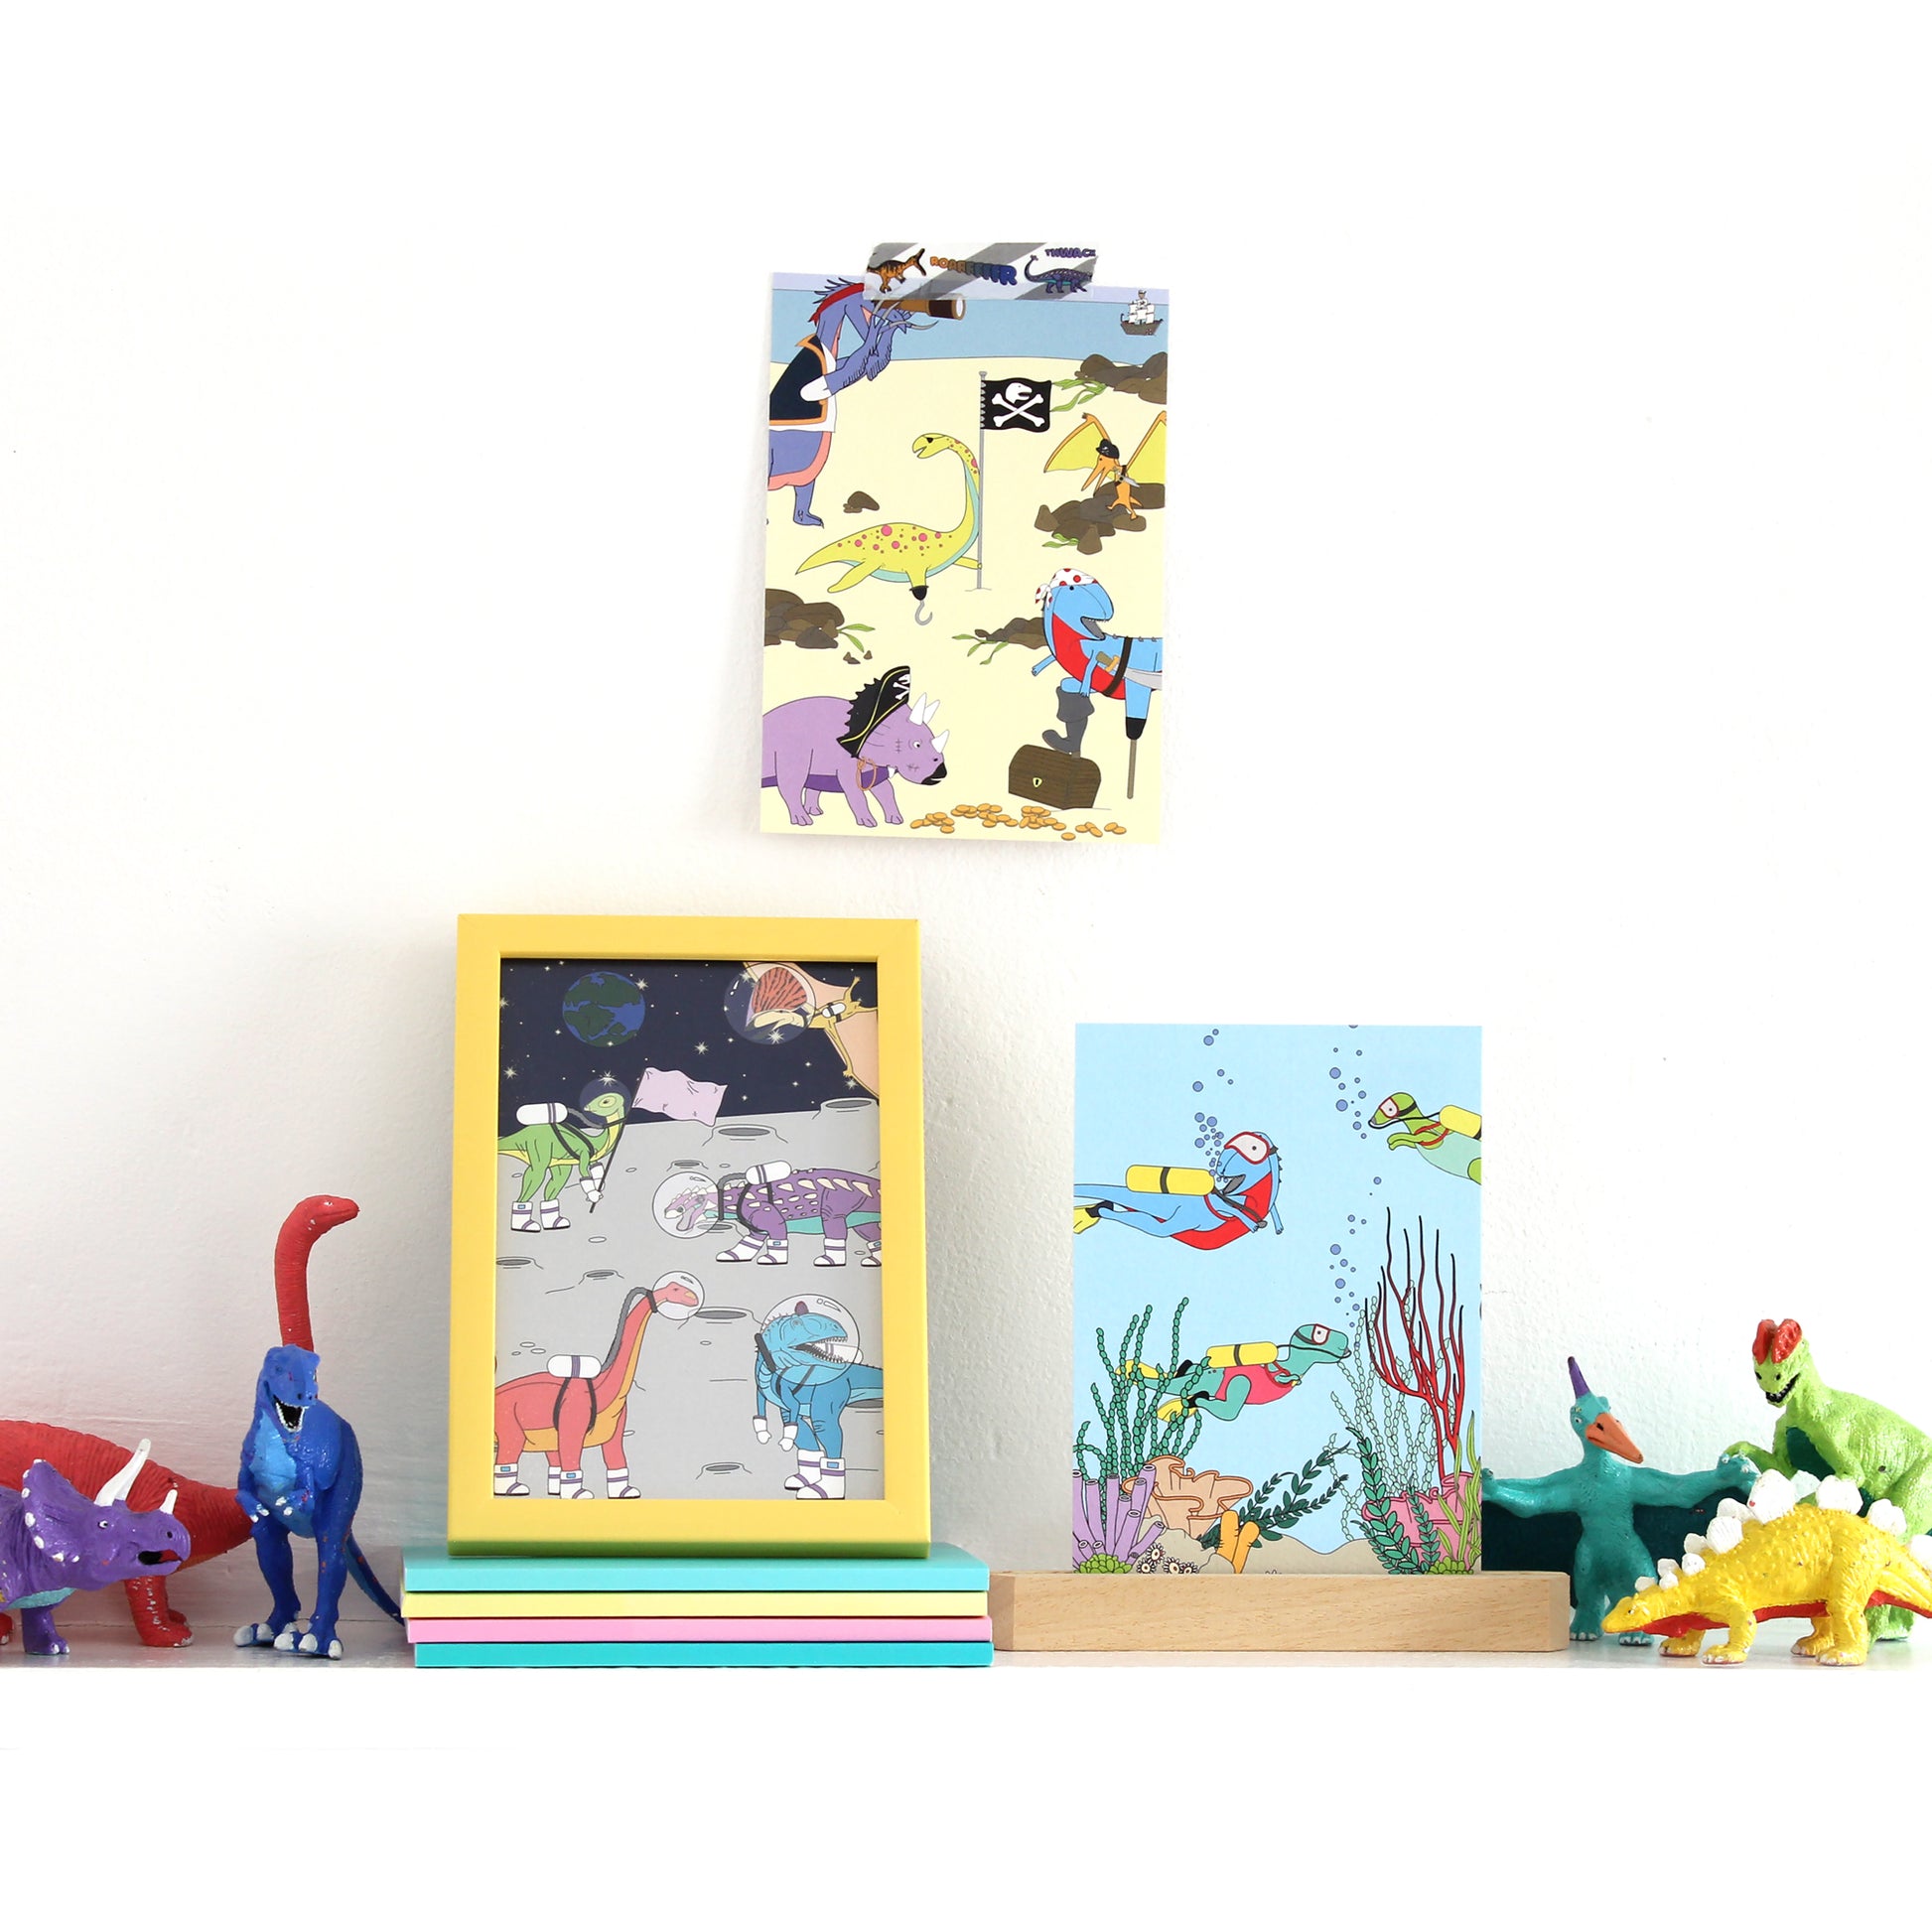 3 dinosaur postcards on a shelf with dinosaur figurines